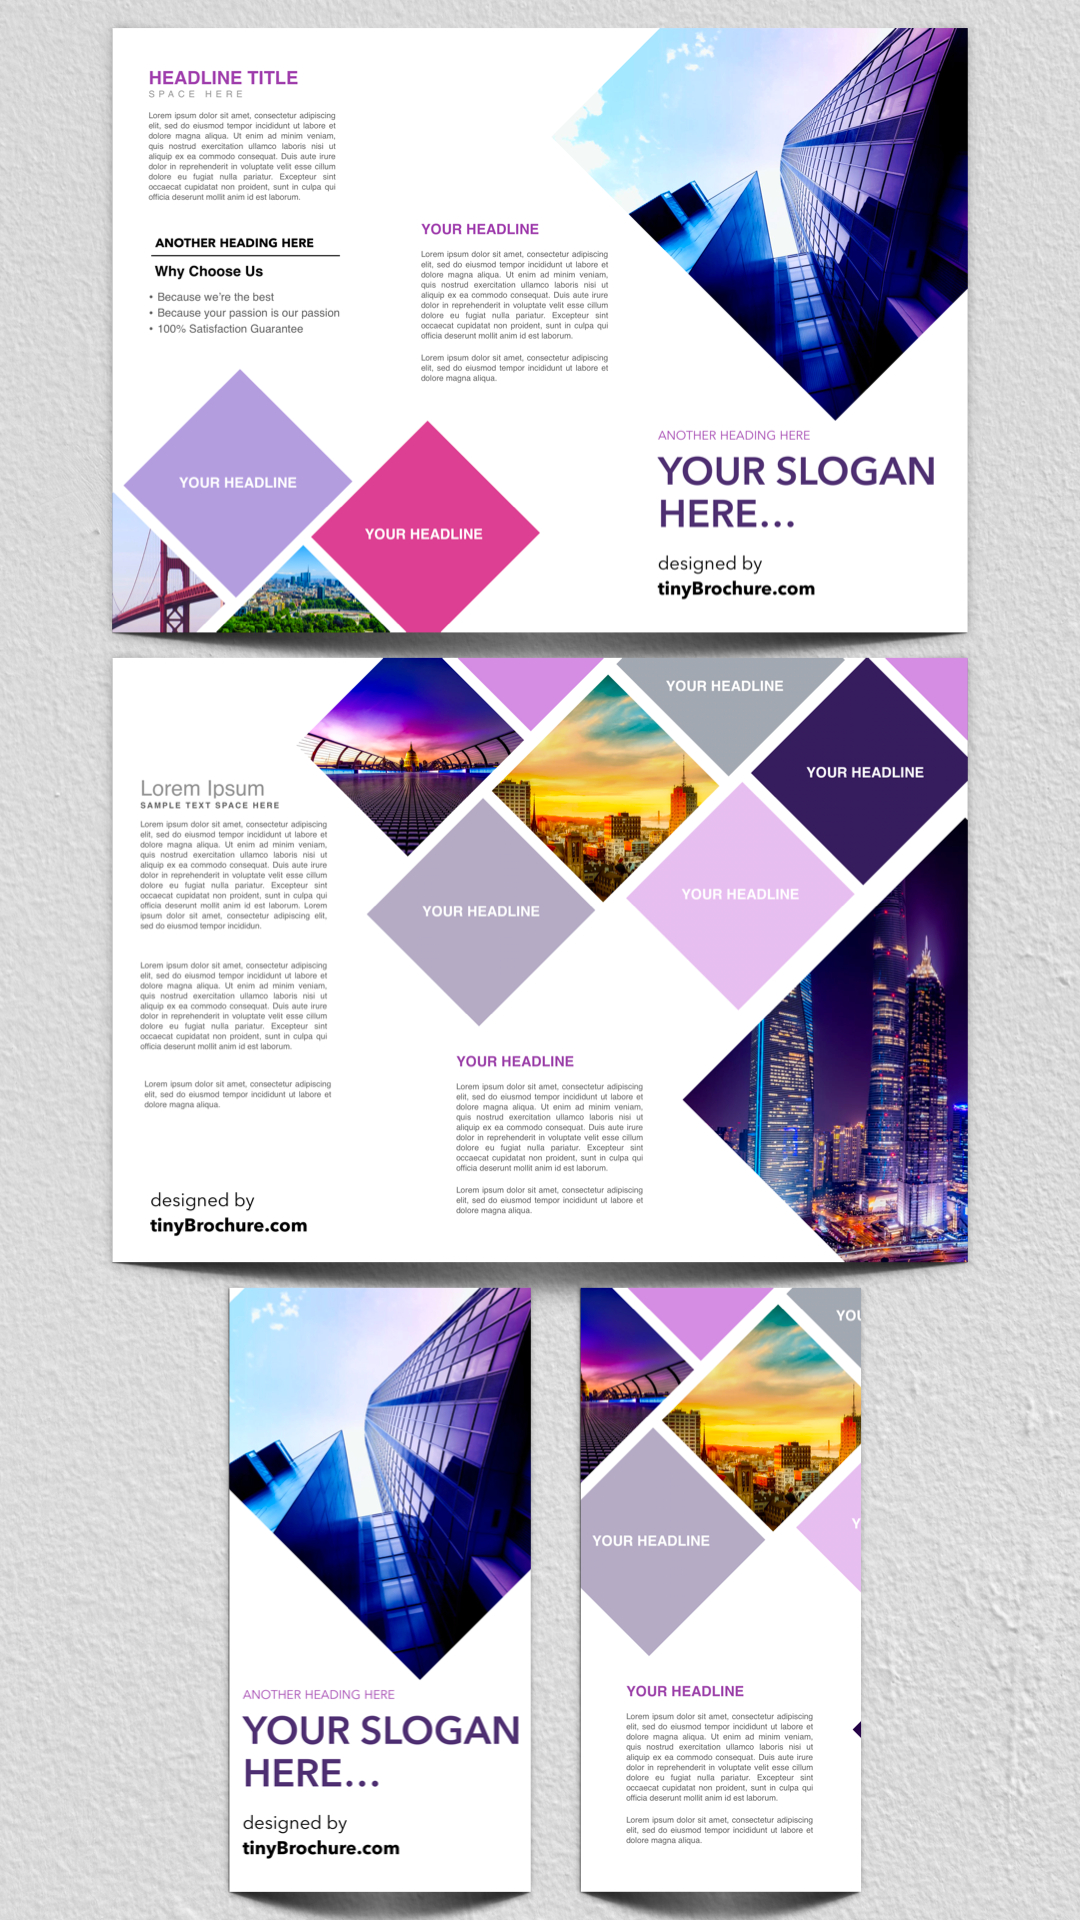 3 Panel Brochure Template Google Docs Free | Graphic Design Within Travel Brochure Template Google Docs